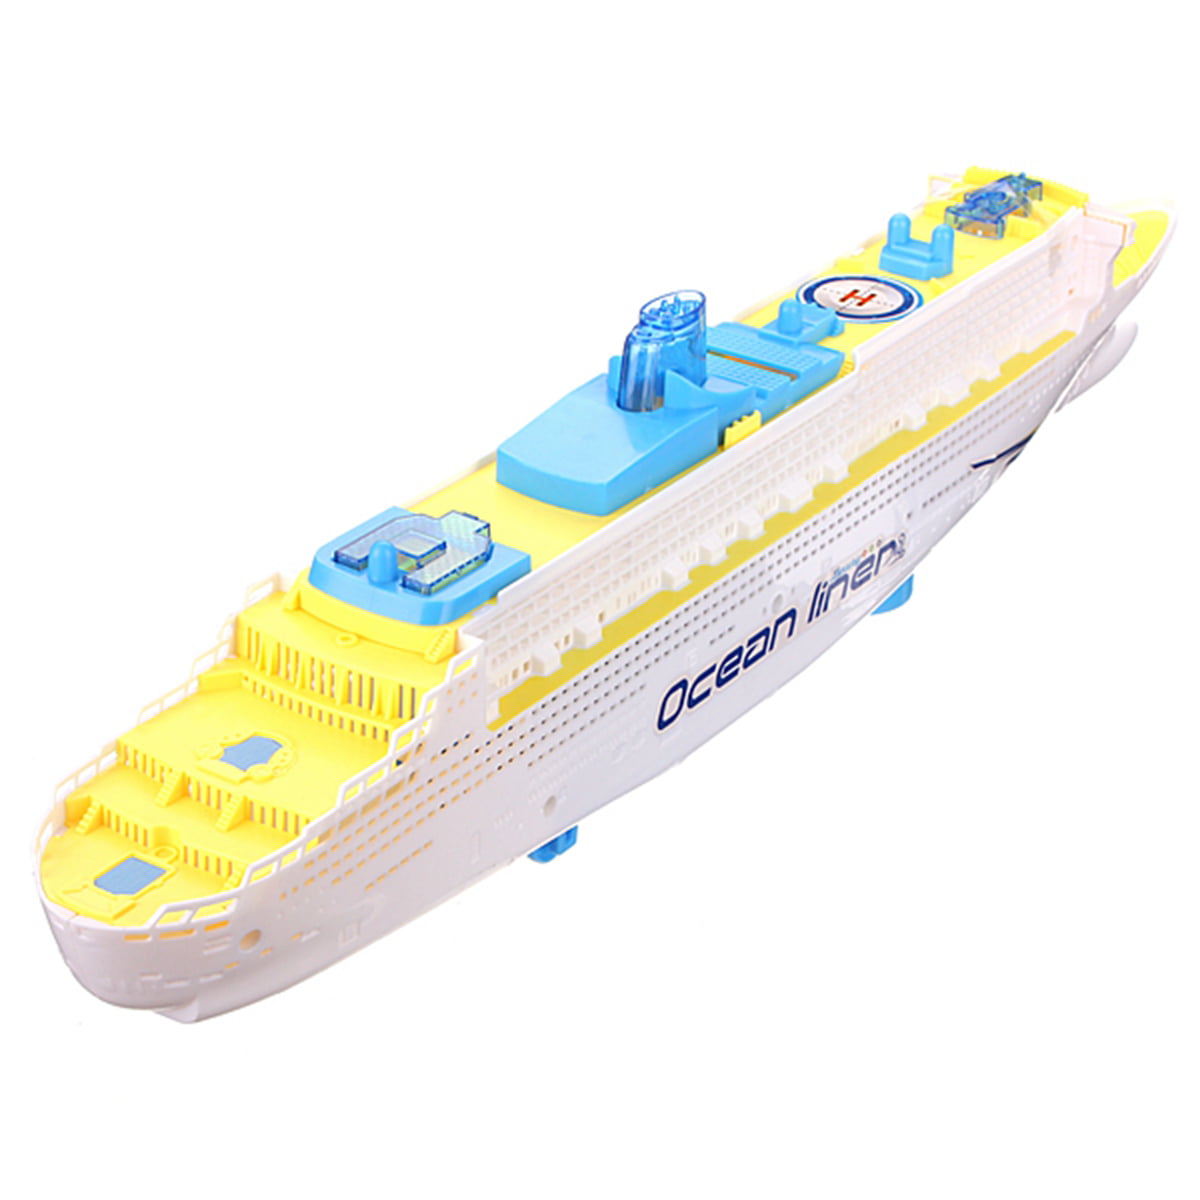 Electric Ocean Liner Toy Blinkende LED Leuchten Geräusche Cruise Ship Boat 